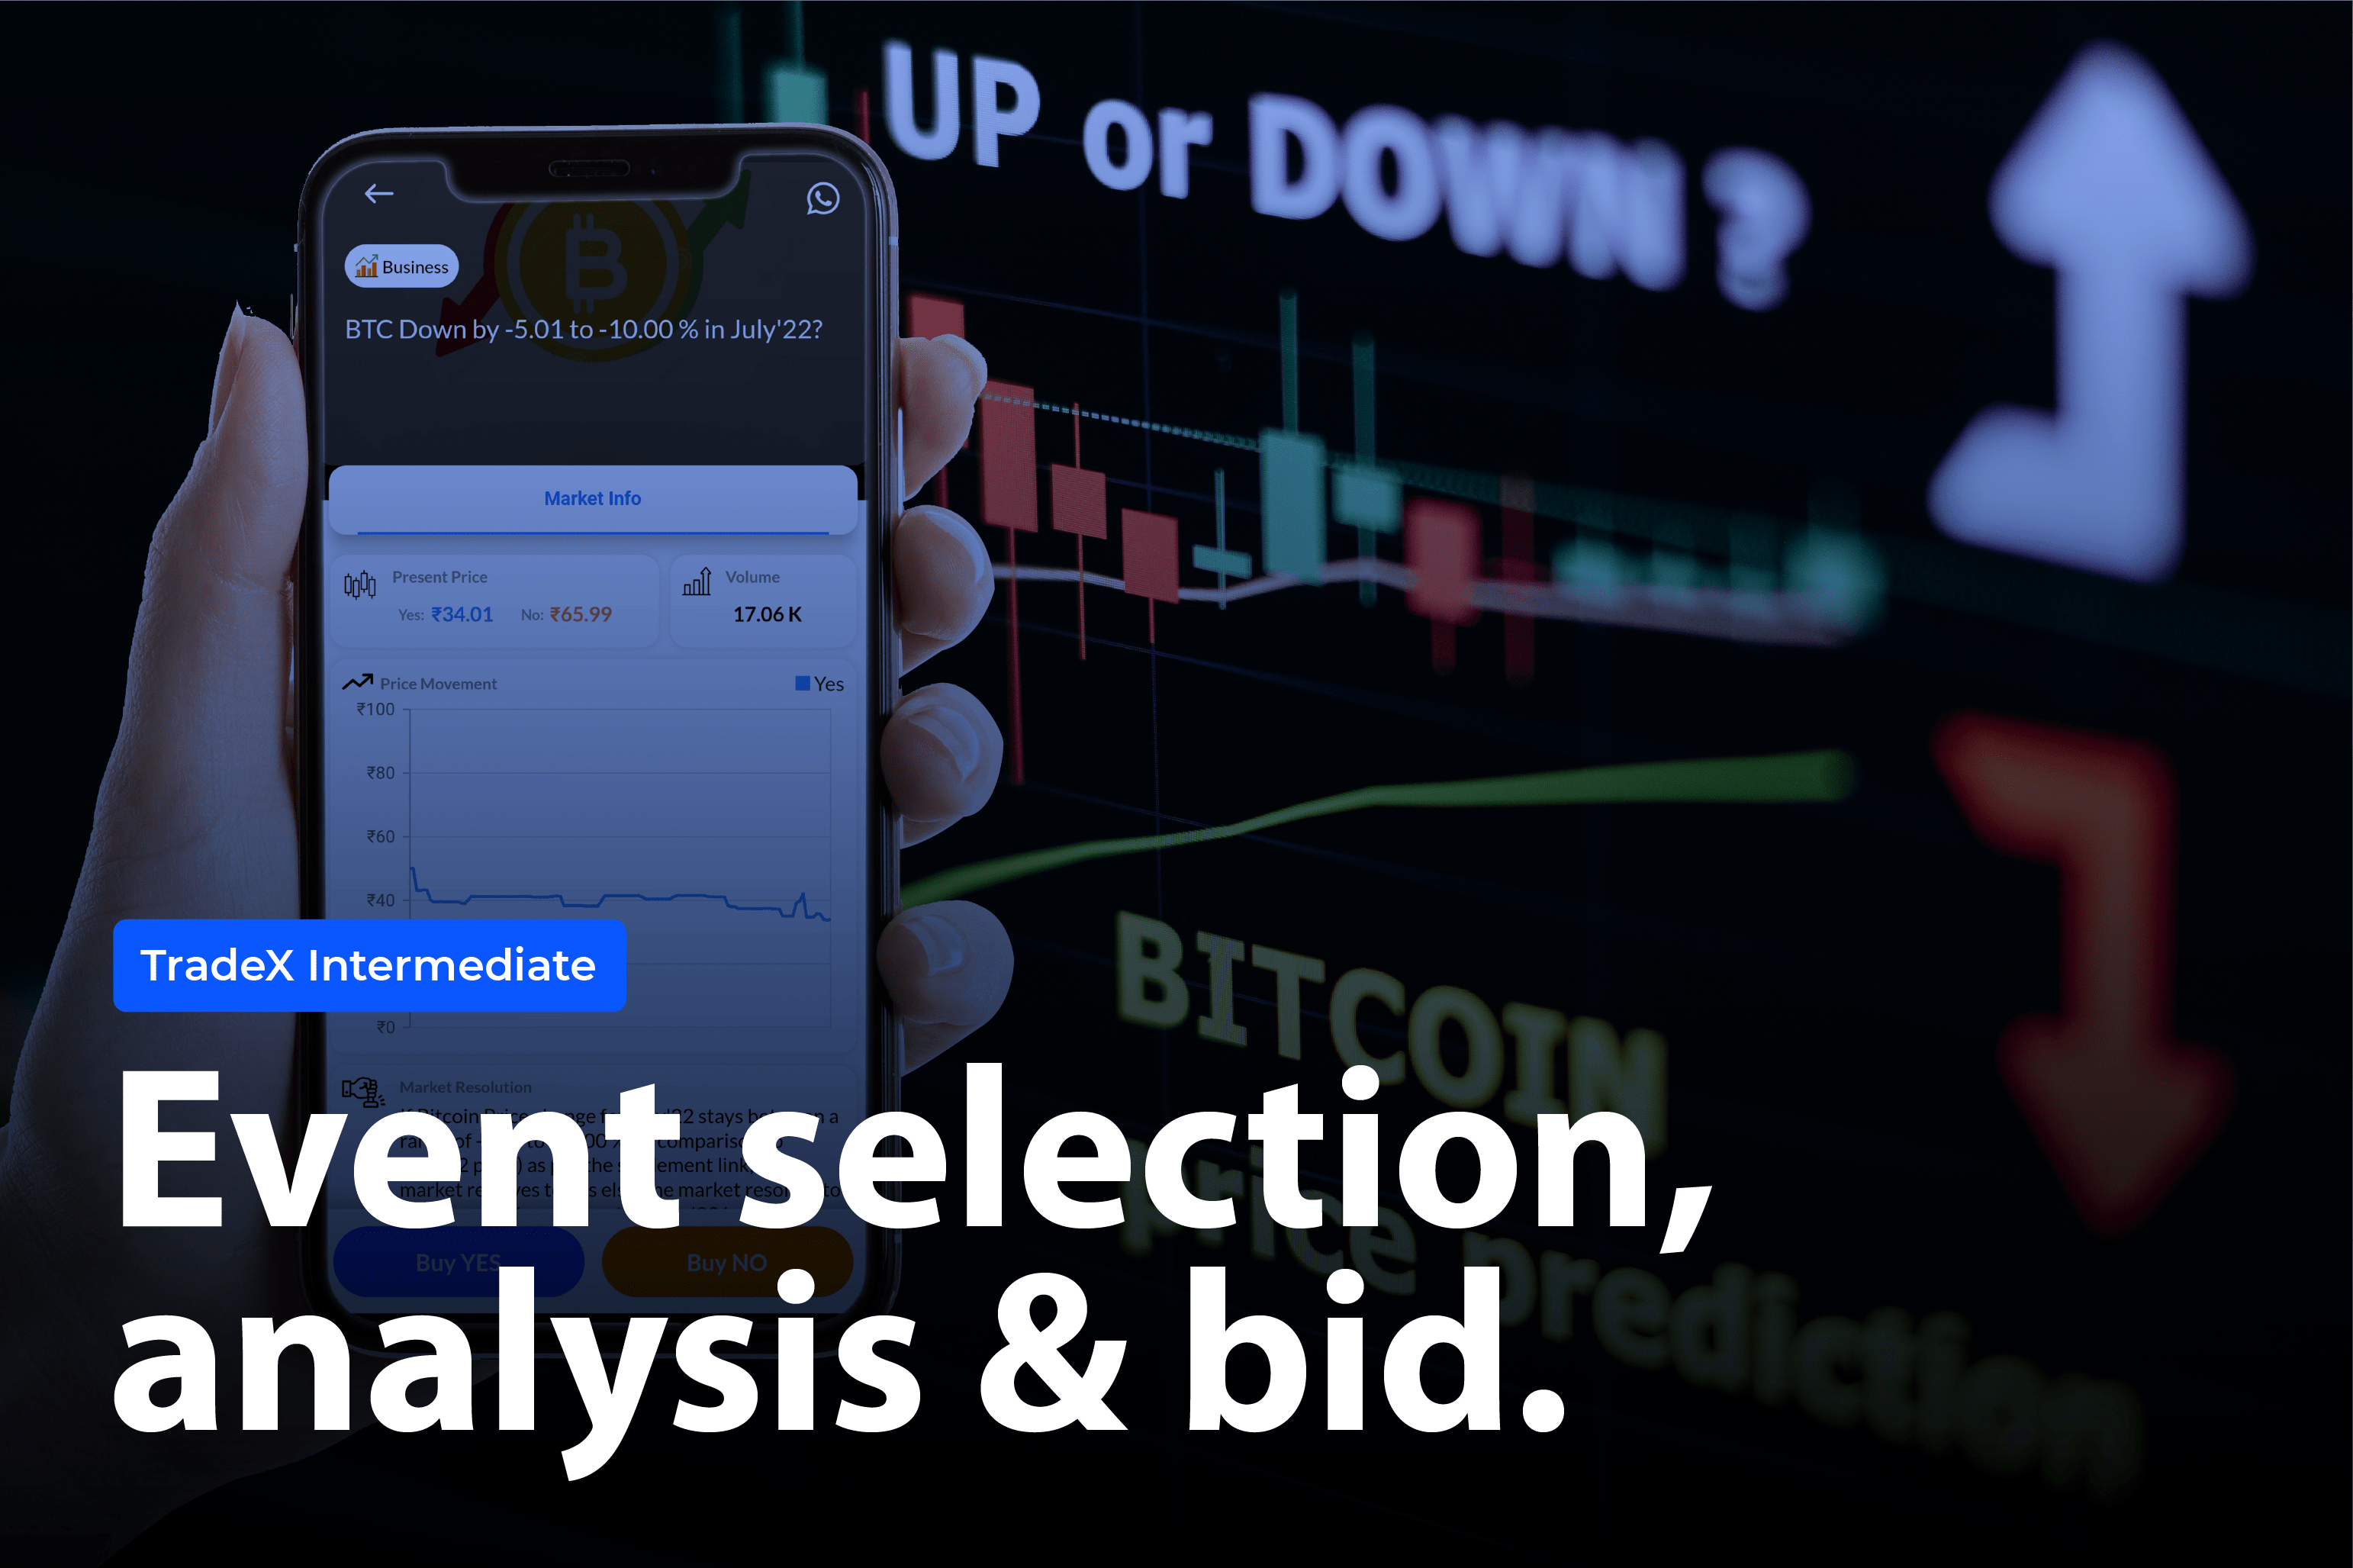 Event selection, analysis & bid